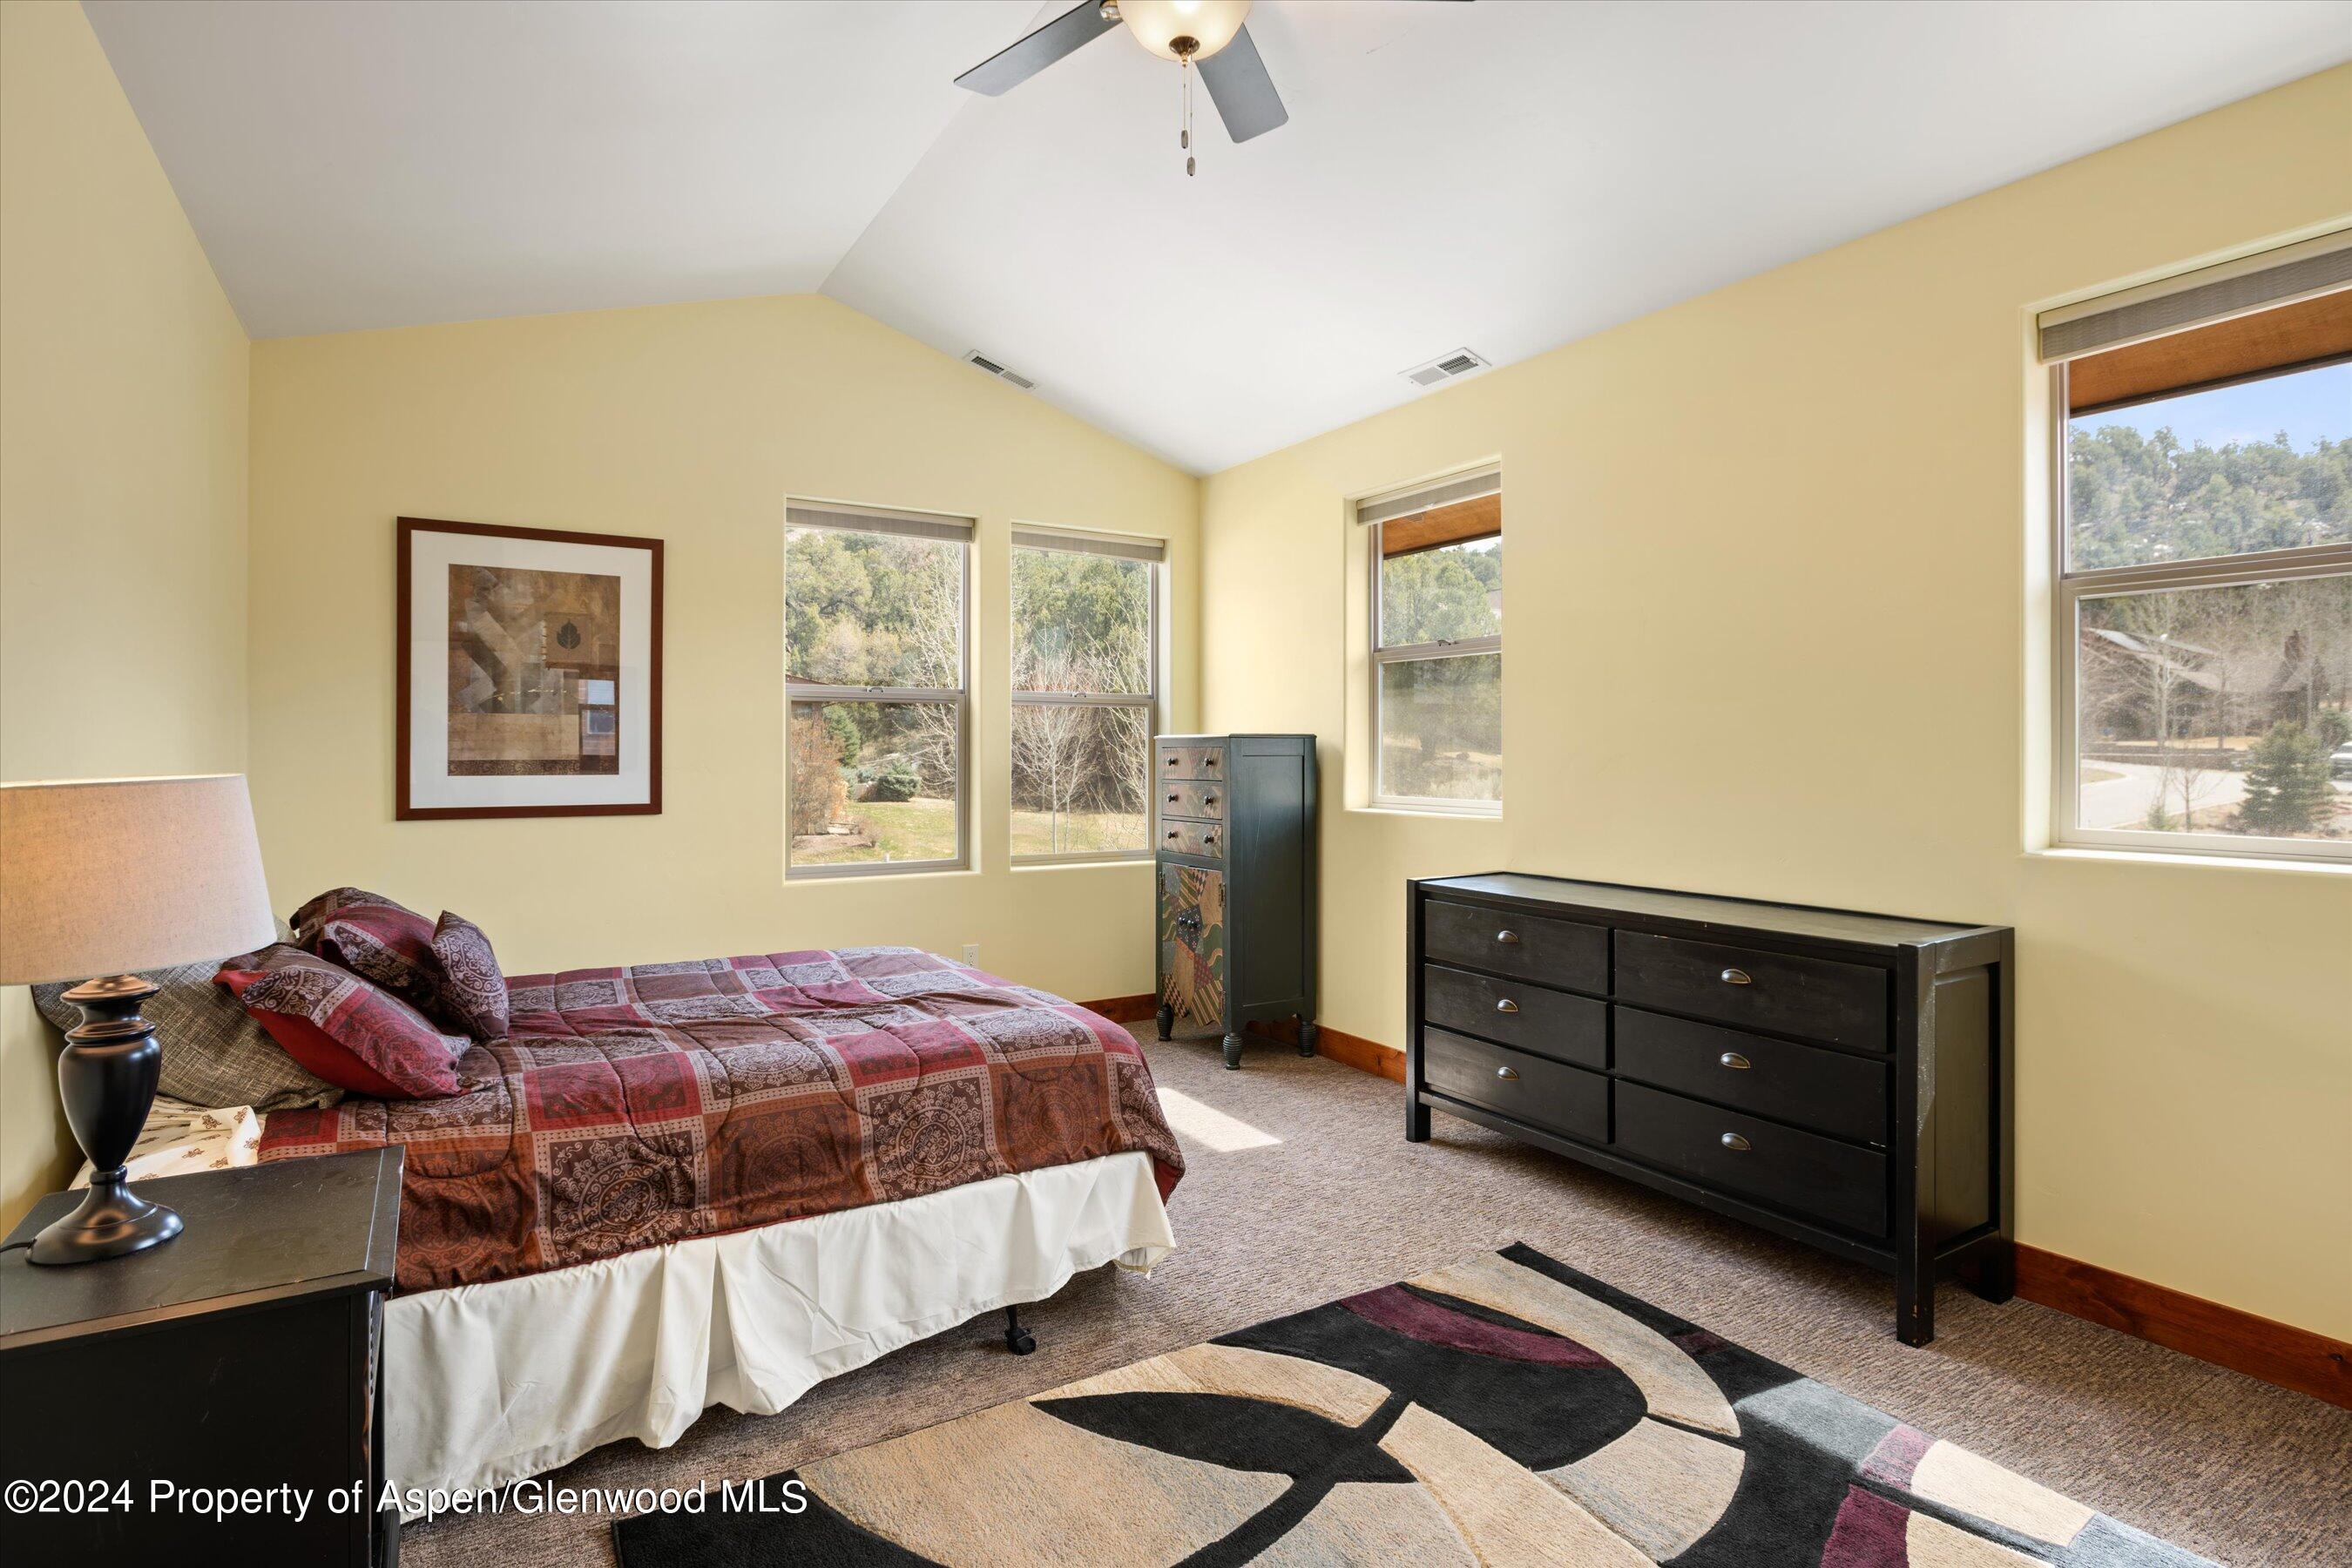 112 Sage Meadow Road, Glenwood Springs, Colorado, 81601, United States, 4 Bedrooms Bedrooms, ,4 BathroomsBathrooms,Residential,For Sale,112 Sage Meadow Road,1504396